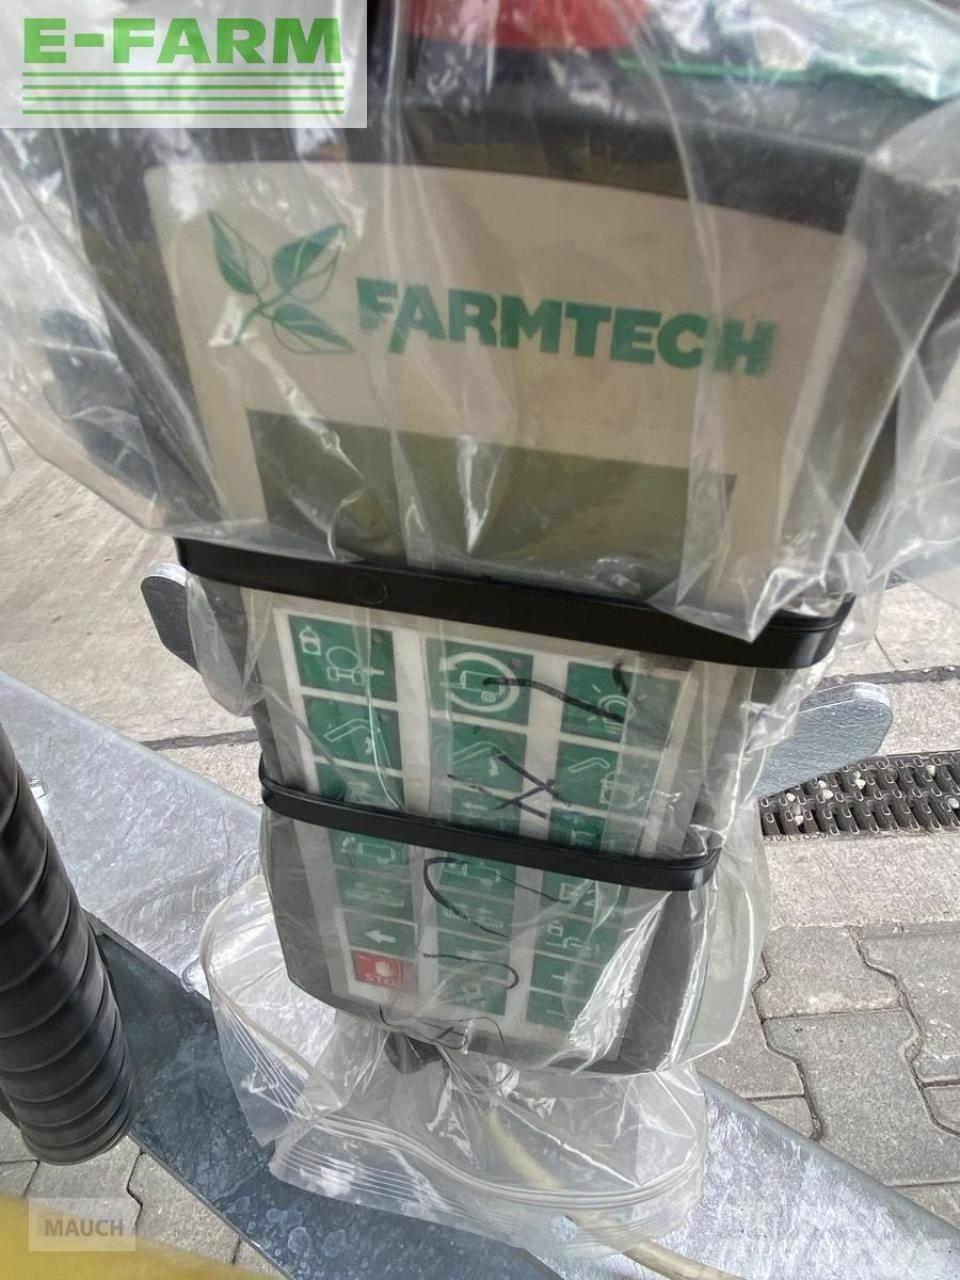 Farmtech polycis 1400 + schleppschuhverteiler condor 15.0 Altre macchine fertilizzanti